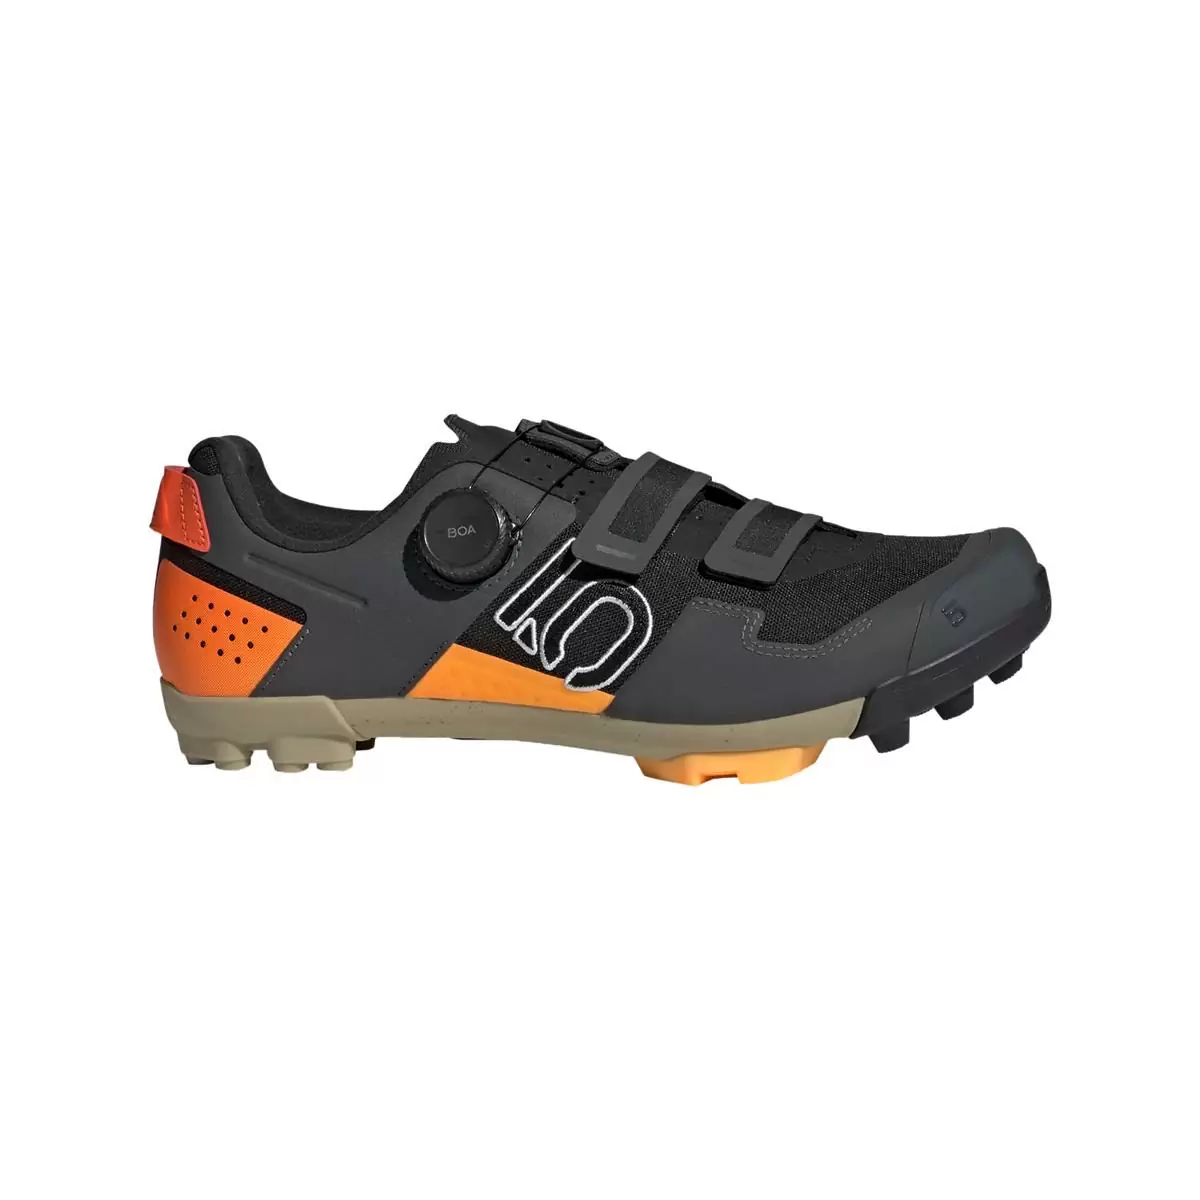 Clip 5.10 Kestrel Boa MTB Shoes Black/Orange Size 42 - image